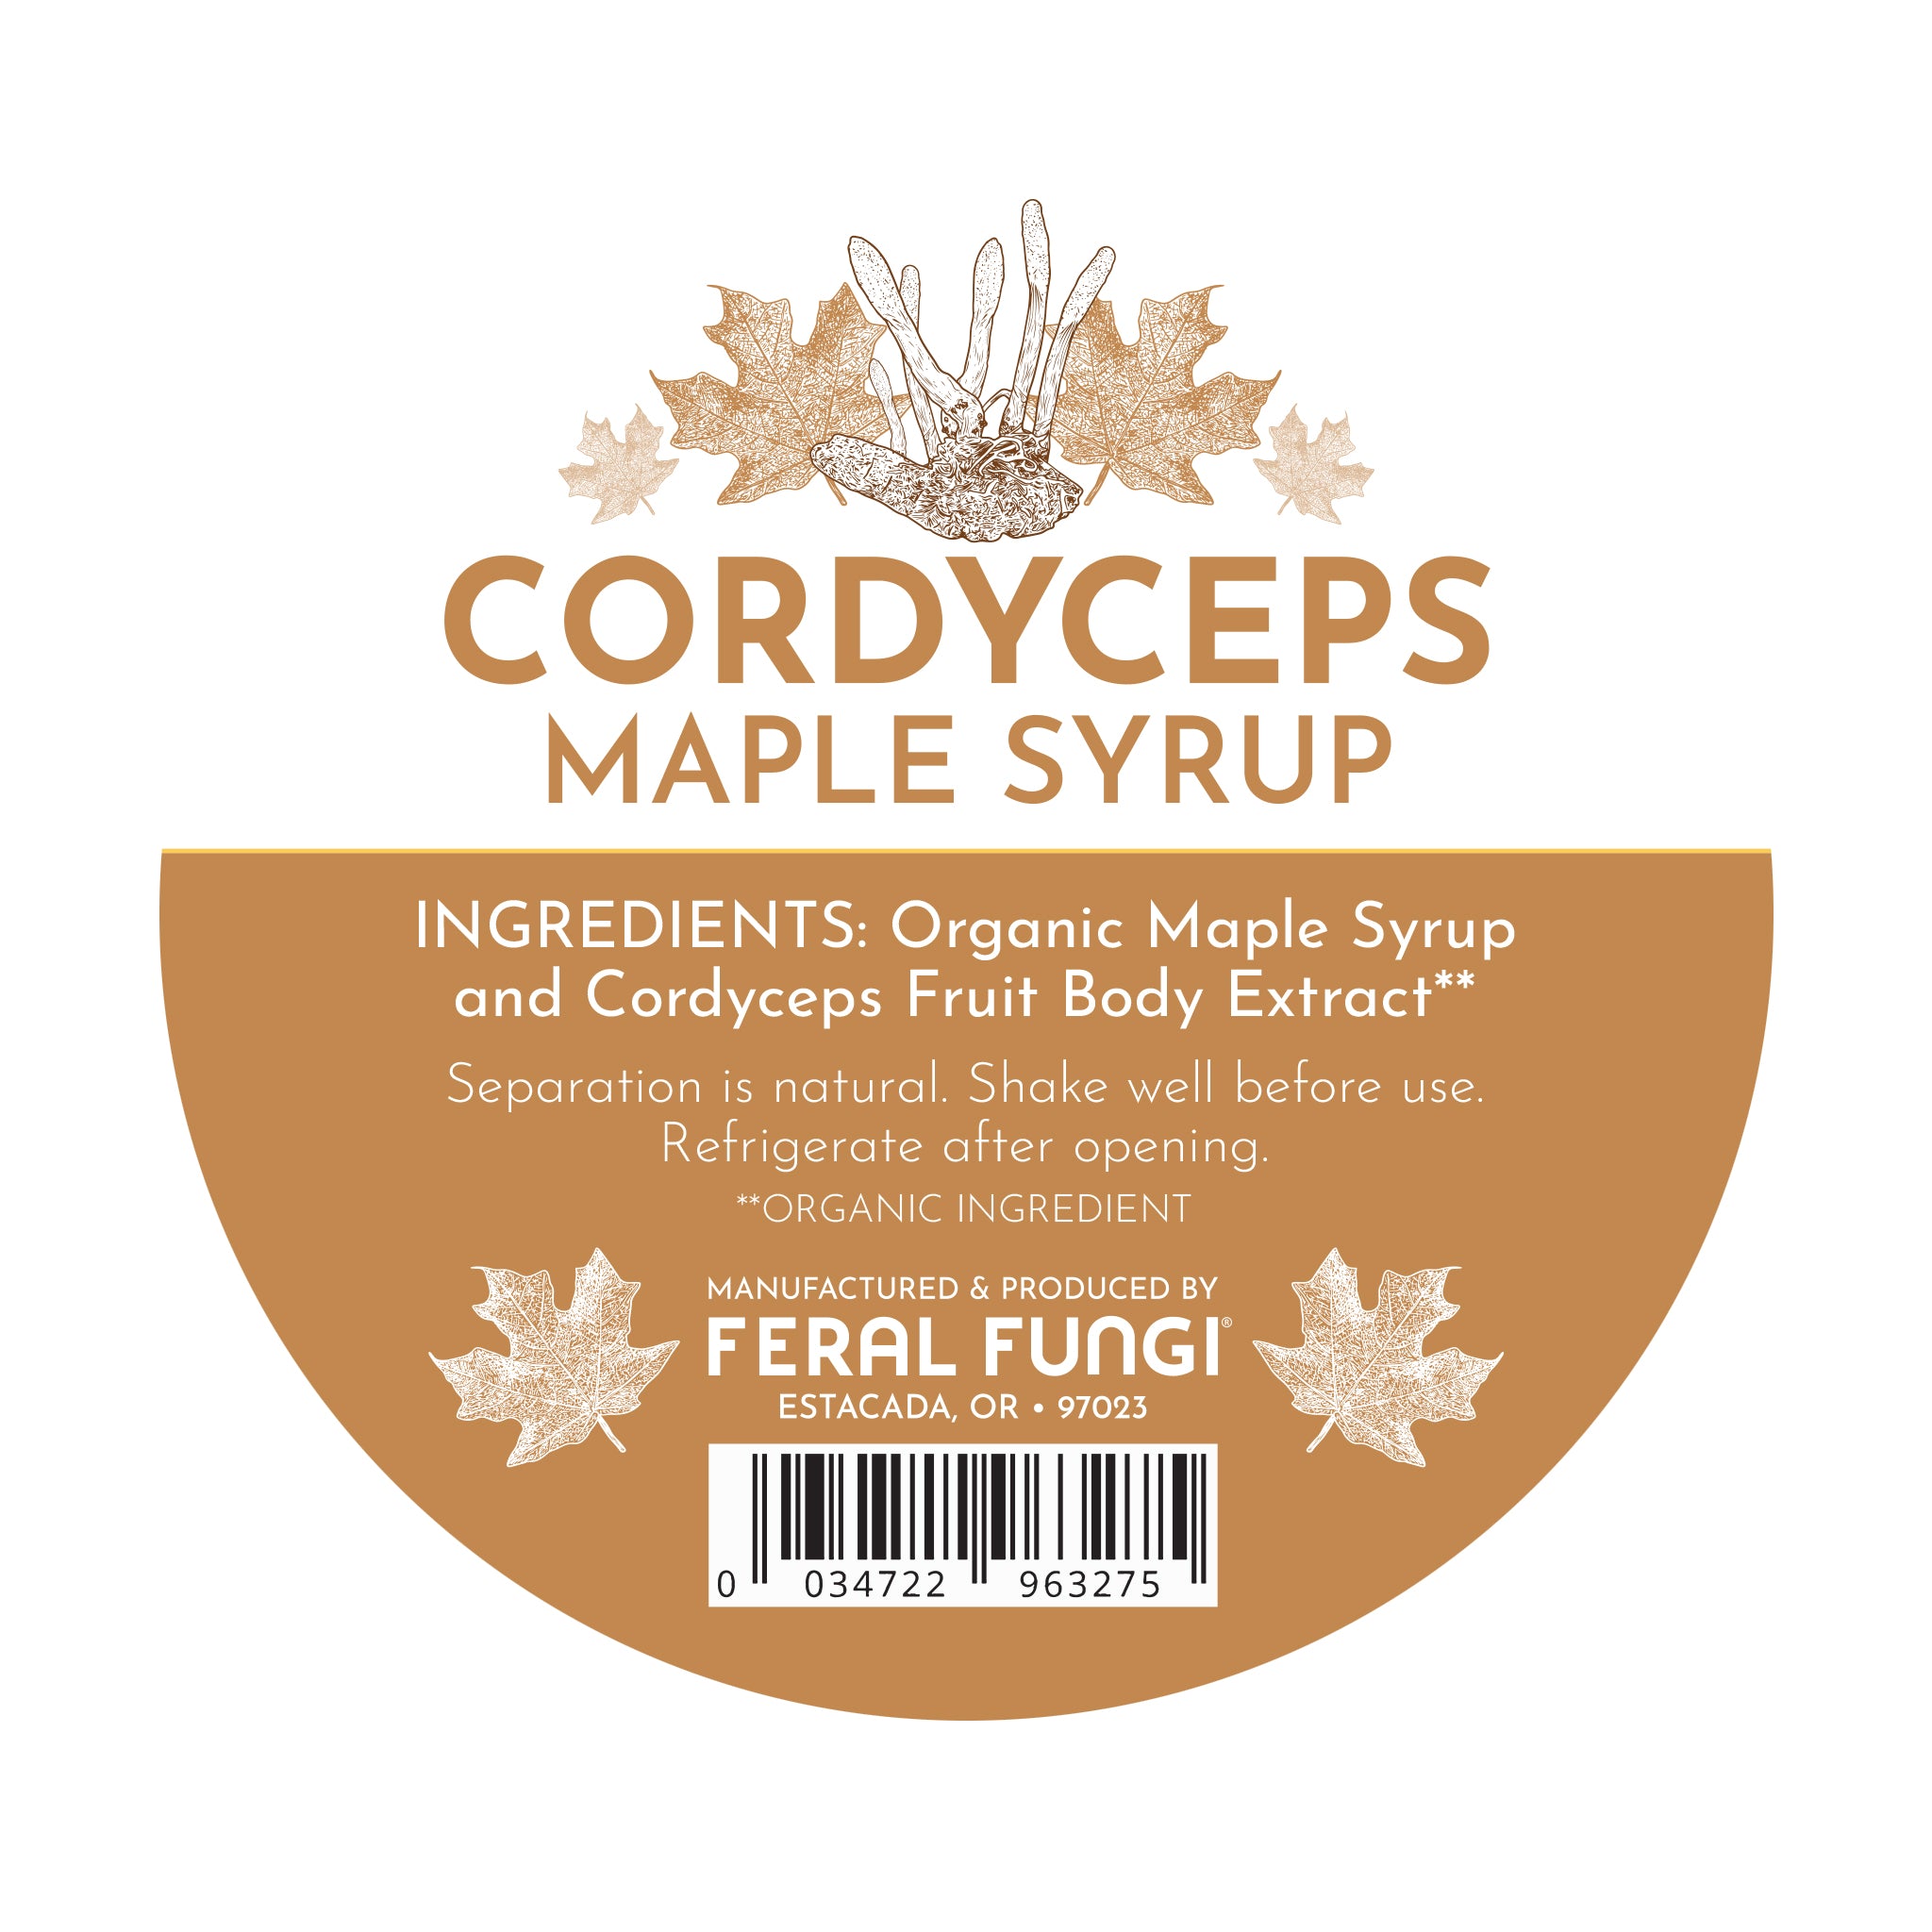 Cordyceps-Feral-Fungi-Mushroom-Maple-Syrup-Find-Your-Fungi-FACTS.jpg